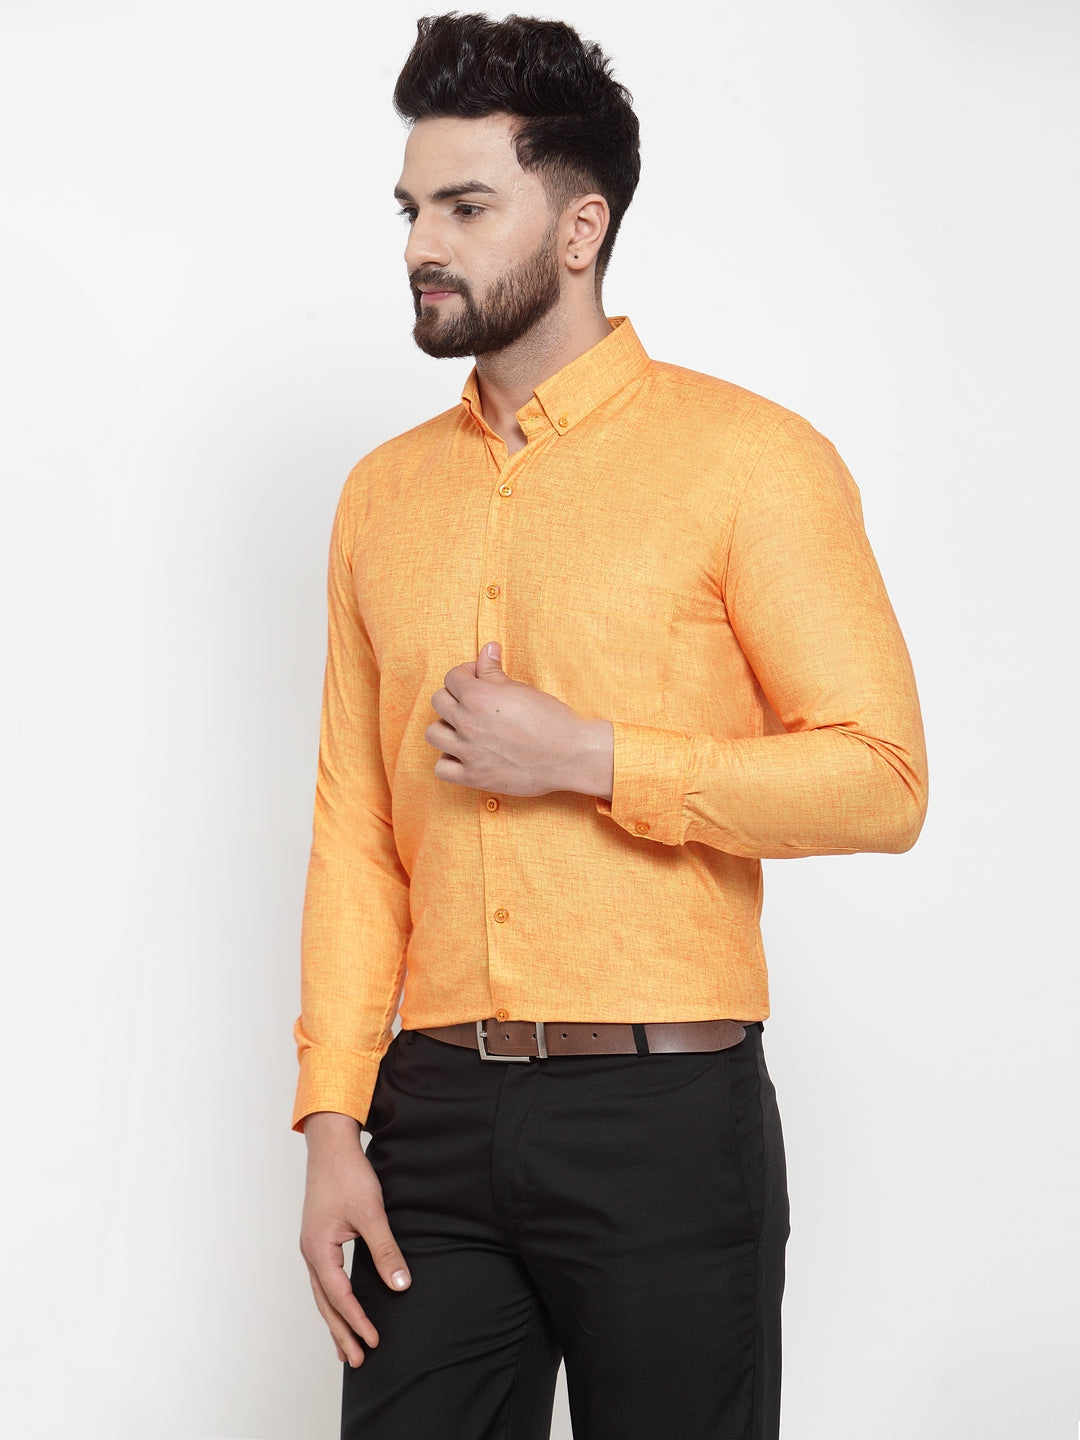 Men's Yellow Cotton Solid Button Down Formal Shirts ( SF 753Yellow ) - Jainish